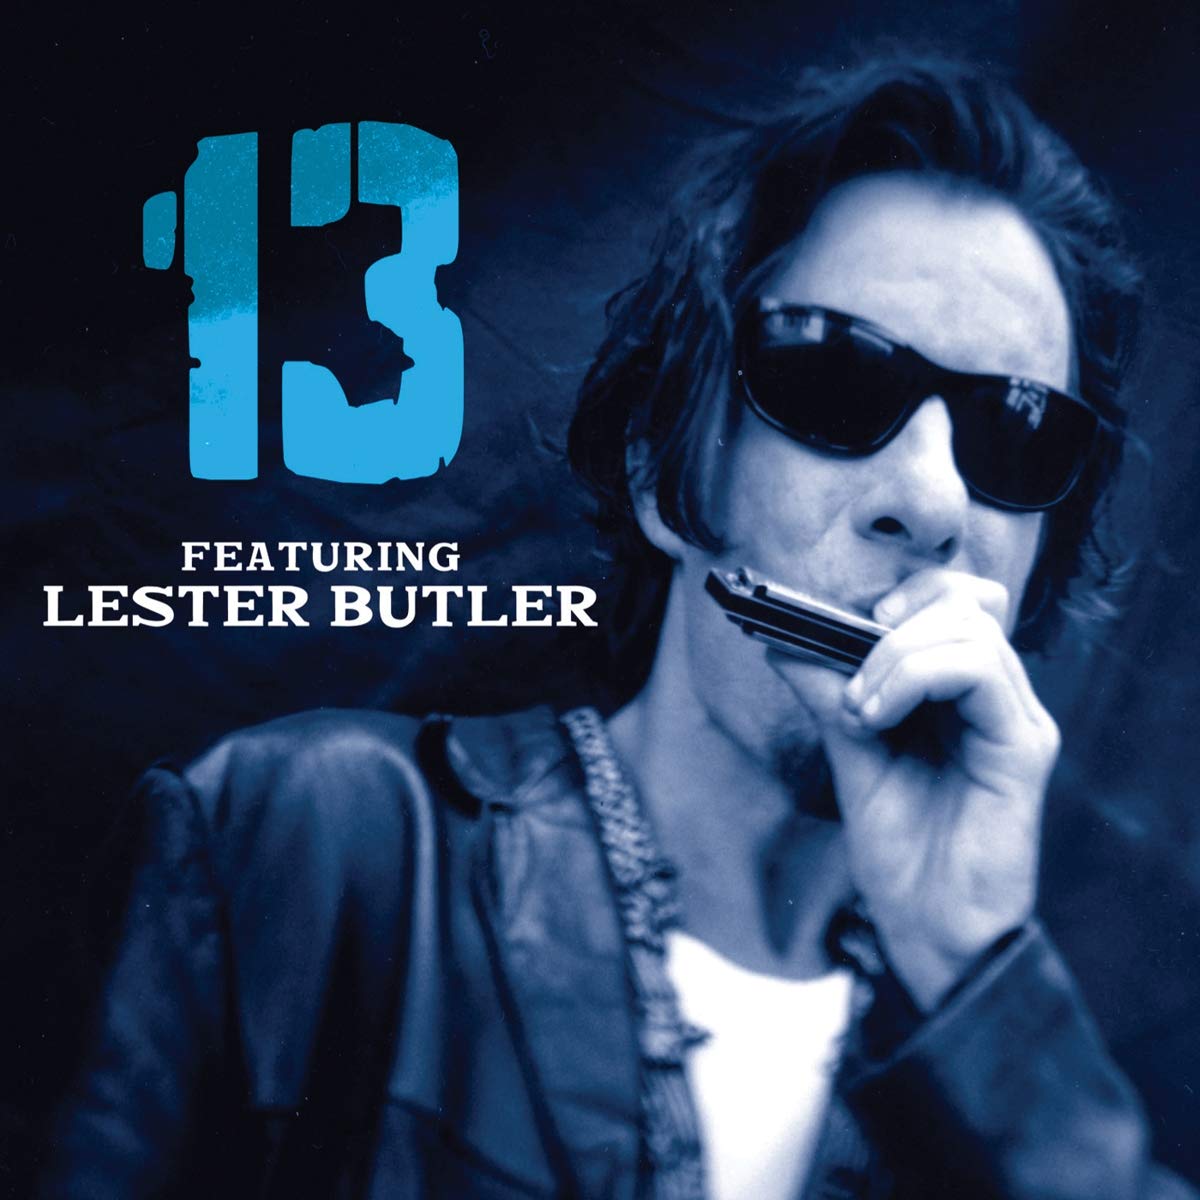 Lester Butler-13 featuring Lester Butler-(FLOATM6111)-Reissue-CD-FLAC-2011-6DM Download